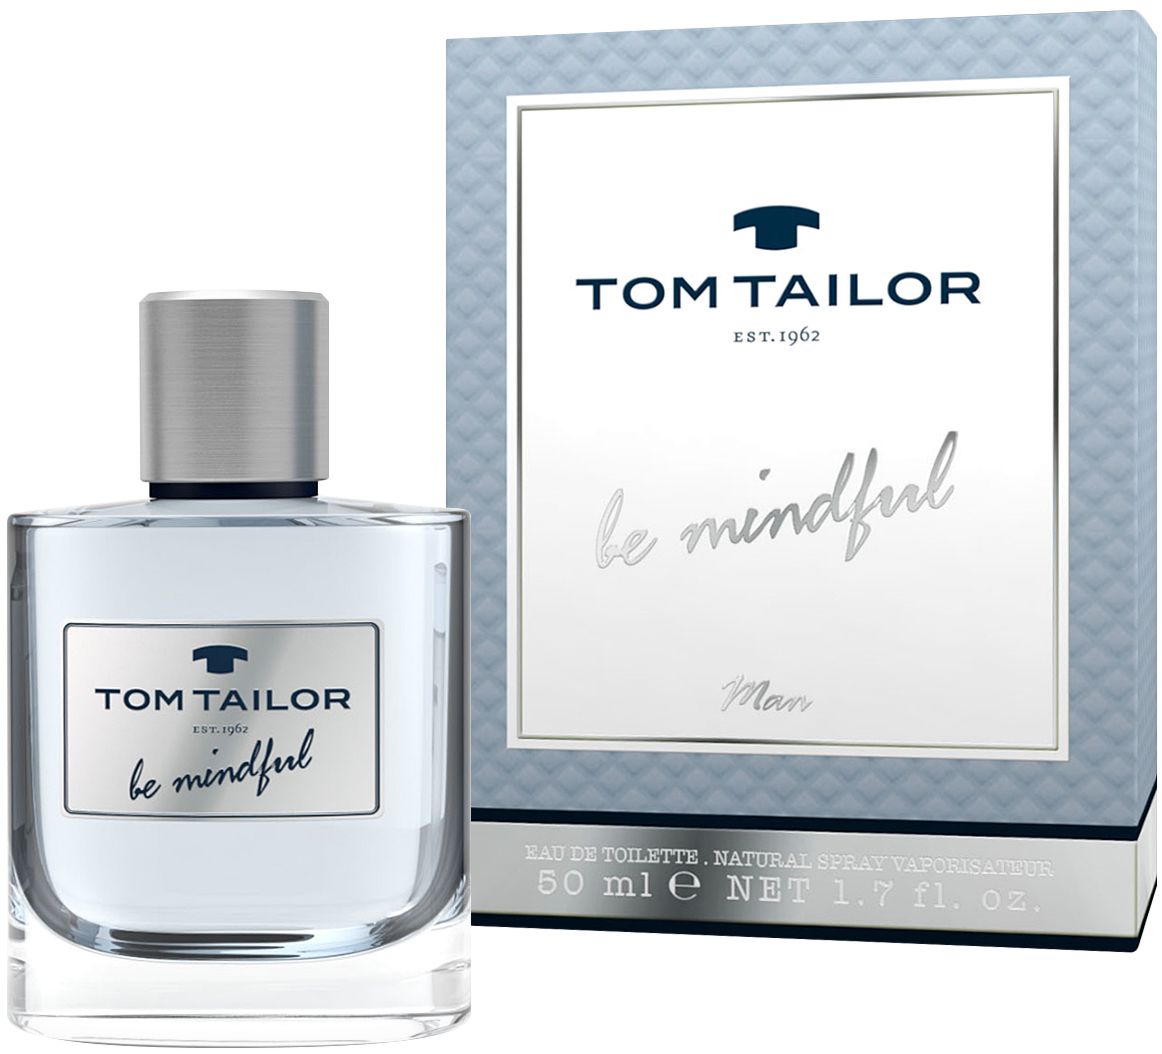 Том тейлор парфюм. Tom Tailor духи. Tom Tailor 1962. Tom Tailor est 1962.